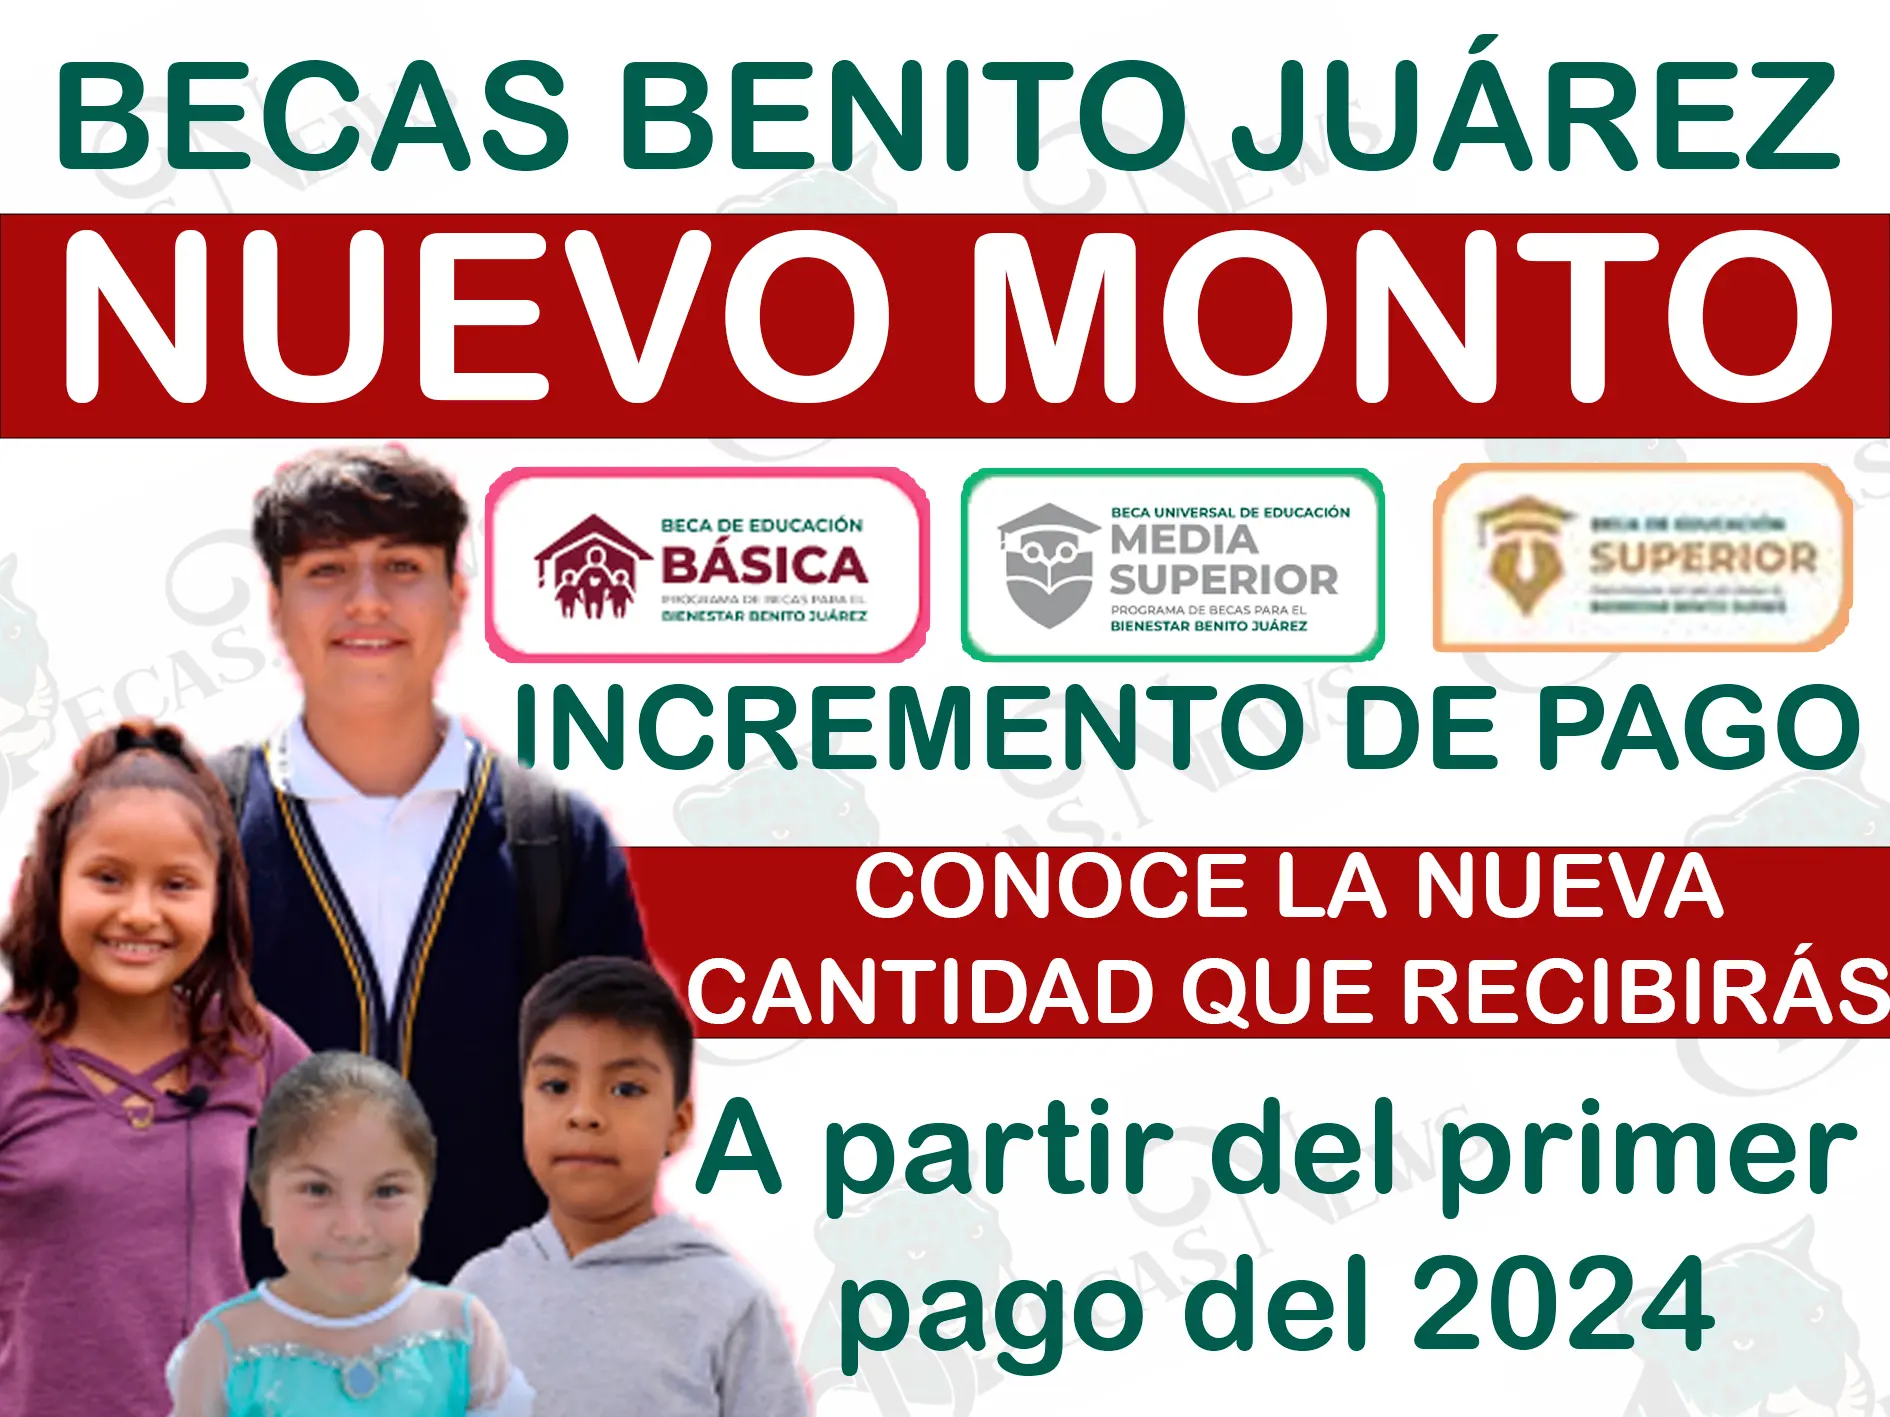 ¡Aviso de pago! A partir de esta fecha recibirán un nuevo aumento: Becas Benito Juárez